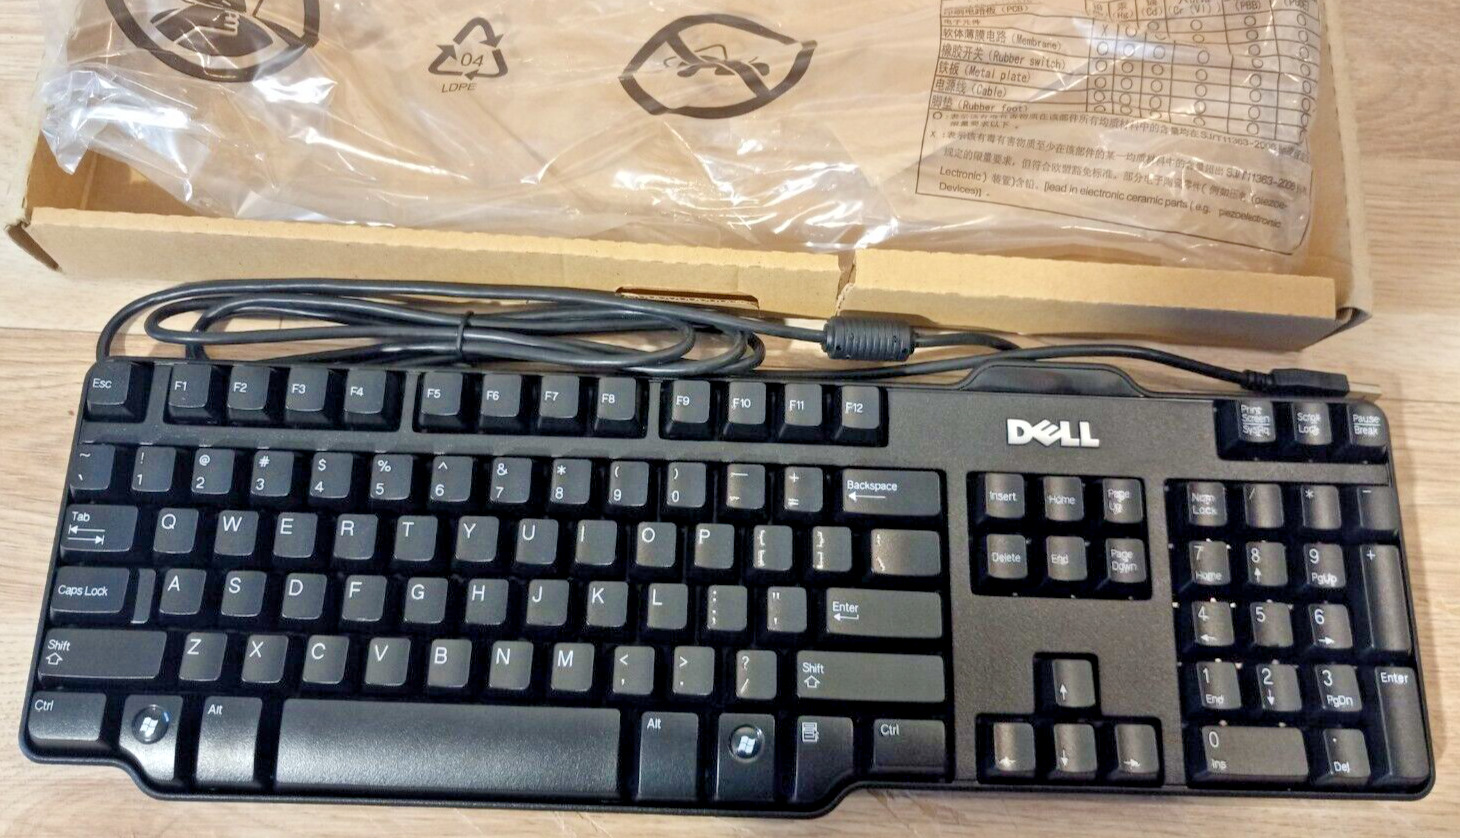 Dell SK-8115 ODJ331 Black Ergonomic 104 Keys USB-Wired Keyboard